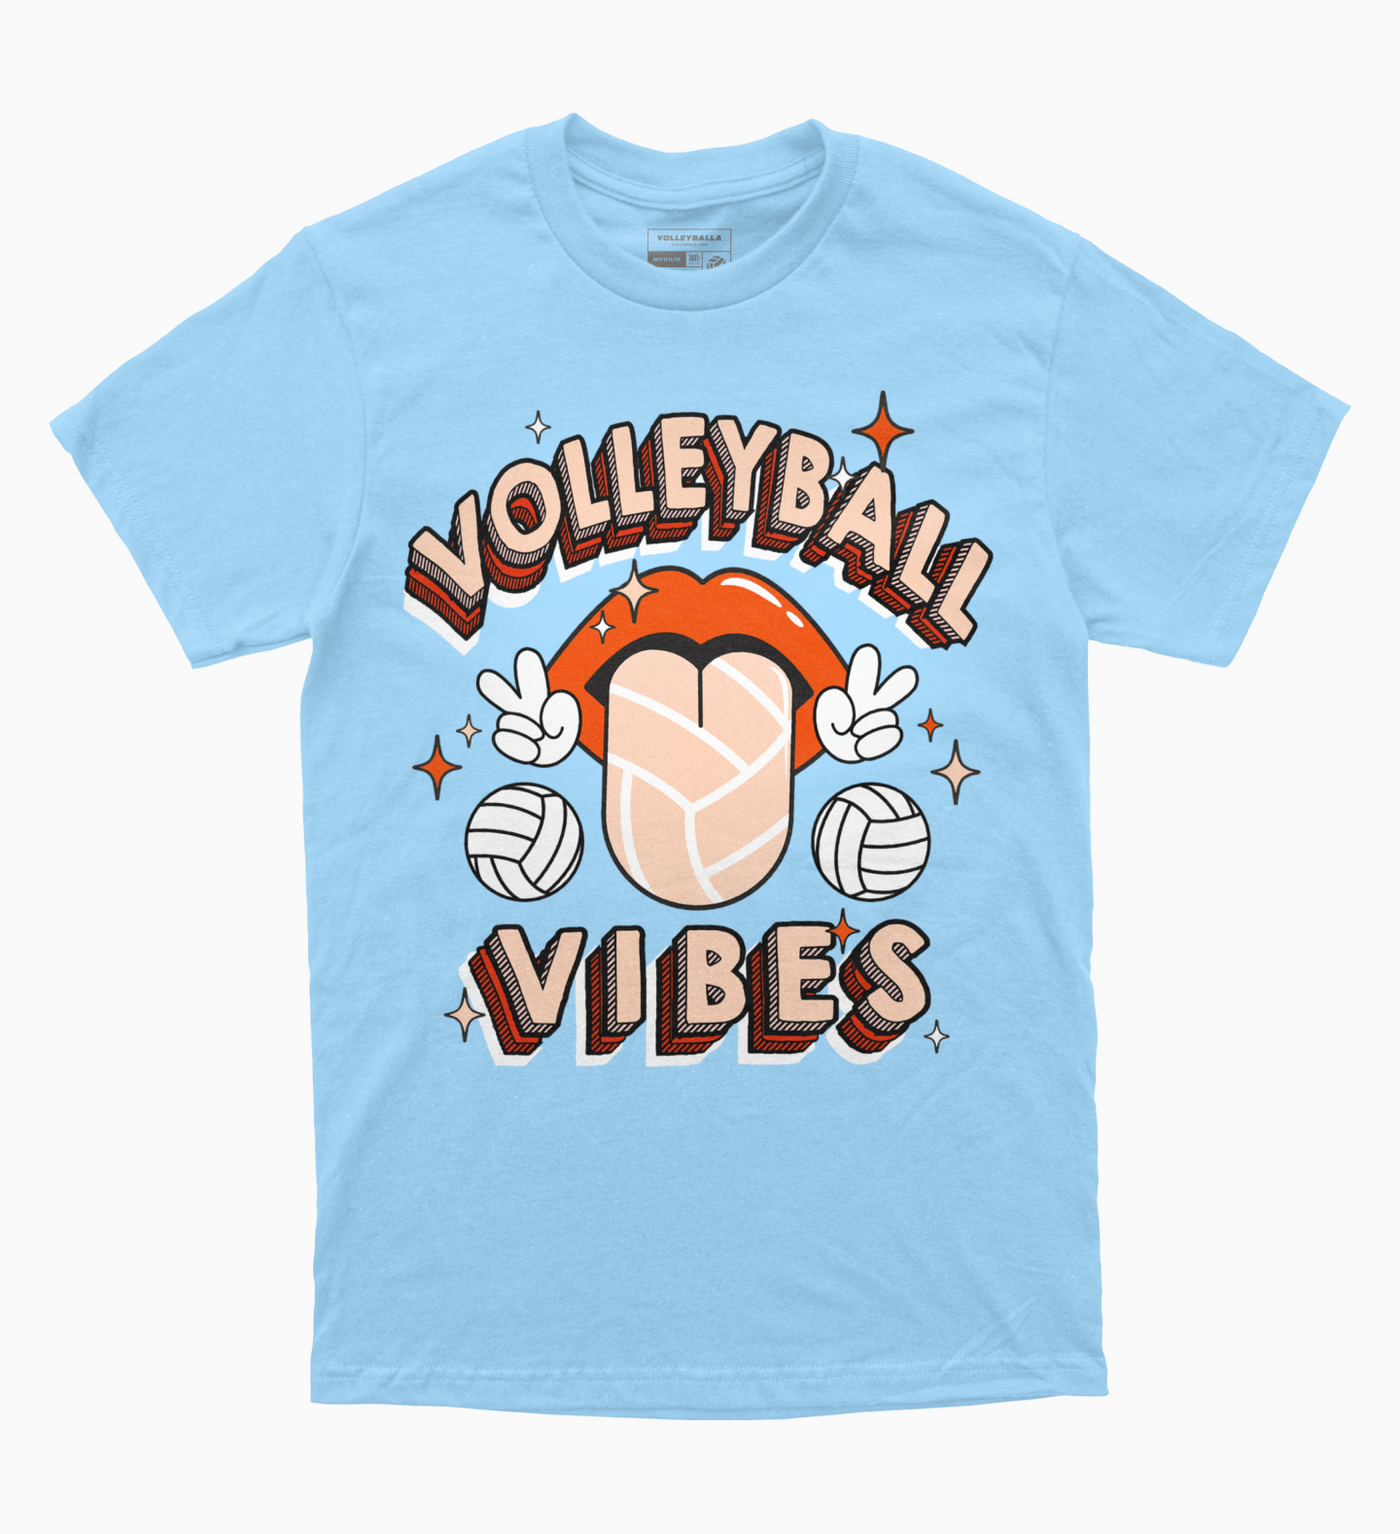 Rockin' Volleyball Vibes T-Shirt